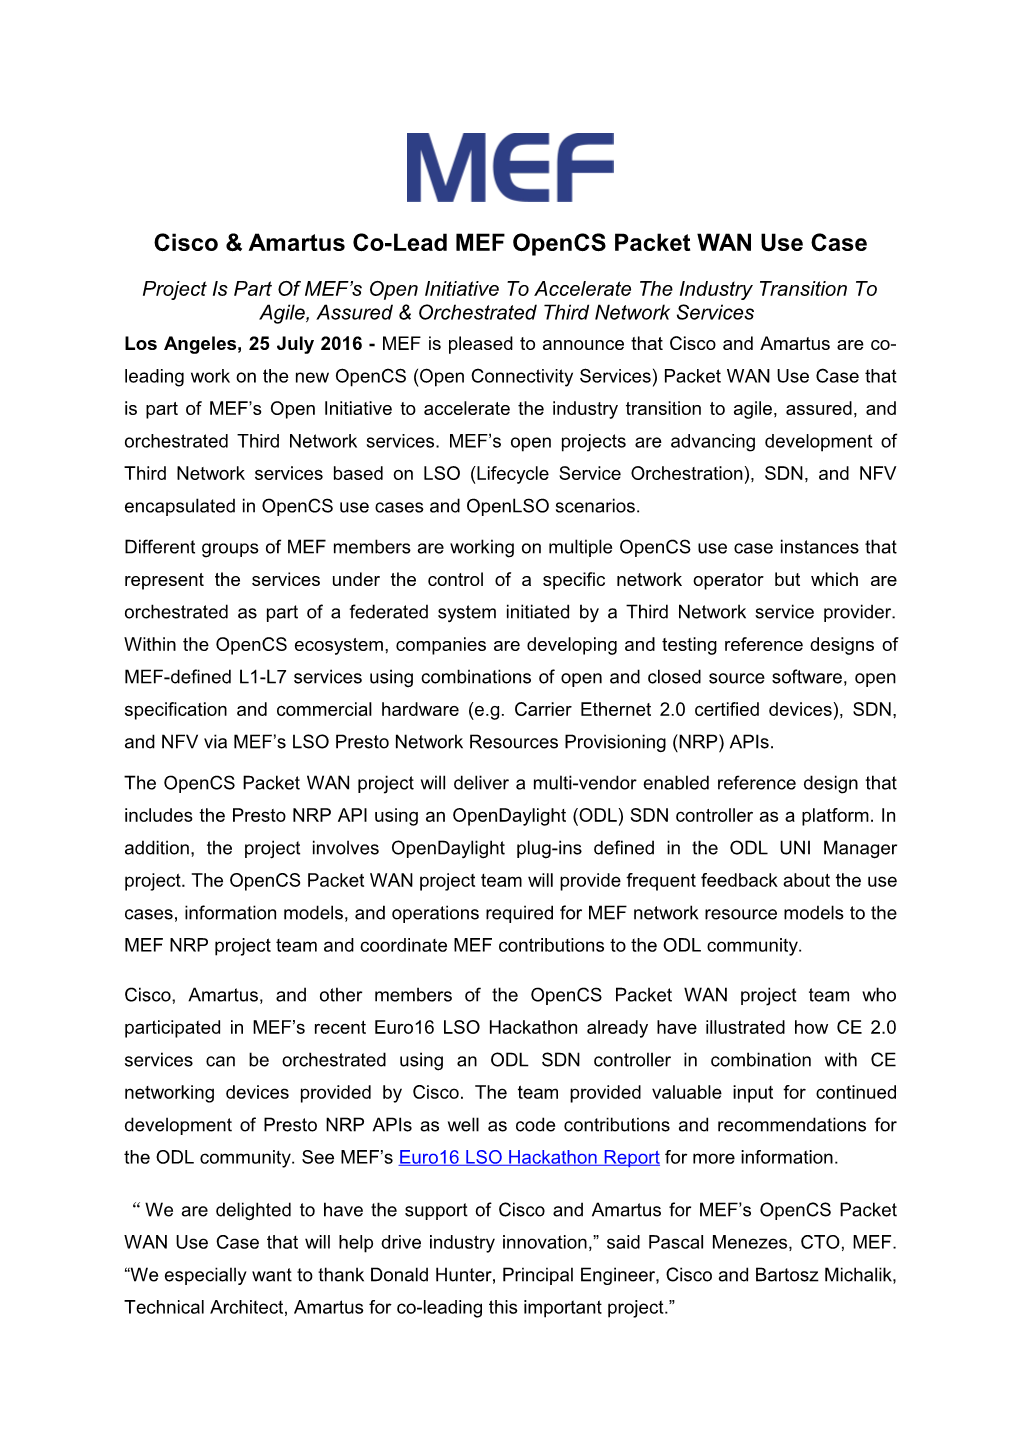 Cisco & Amartus Co-Lead MEF Opencs Packet WAN Use Case